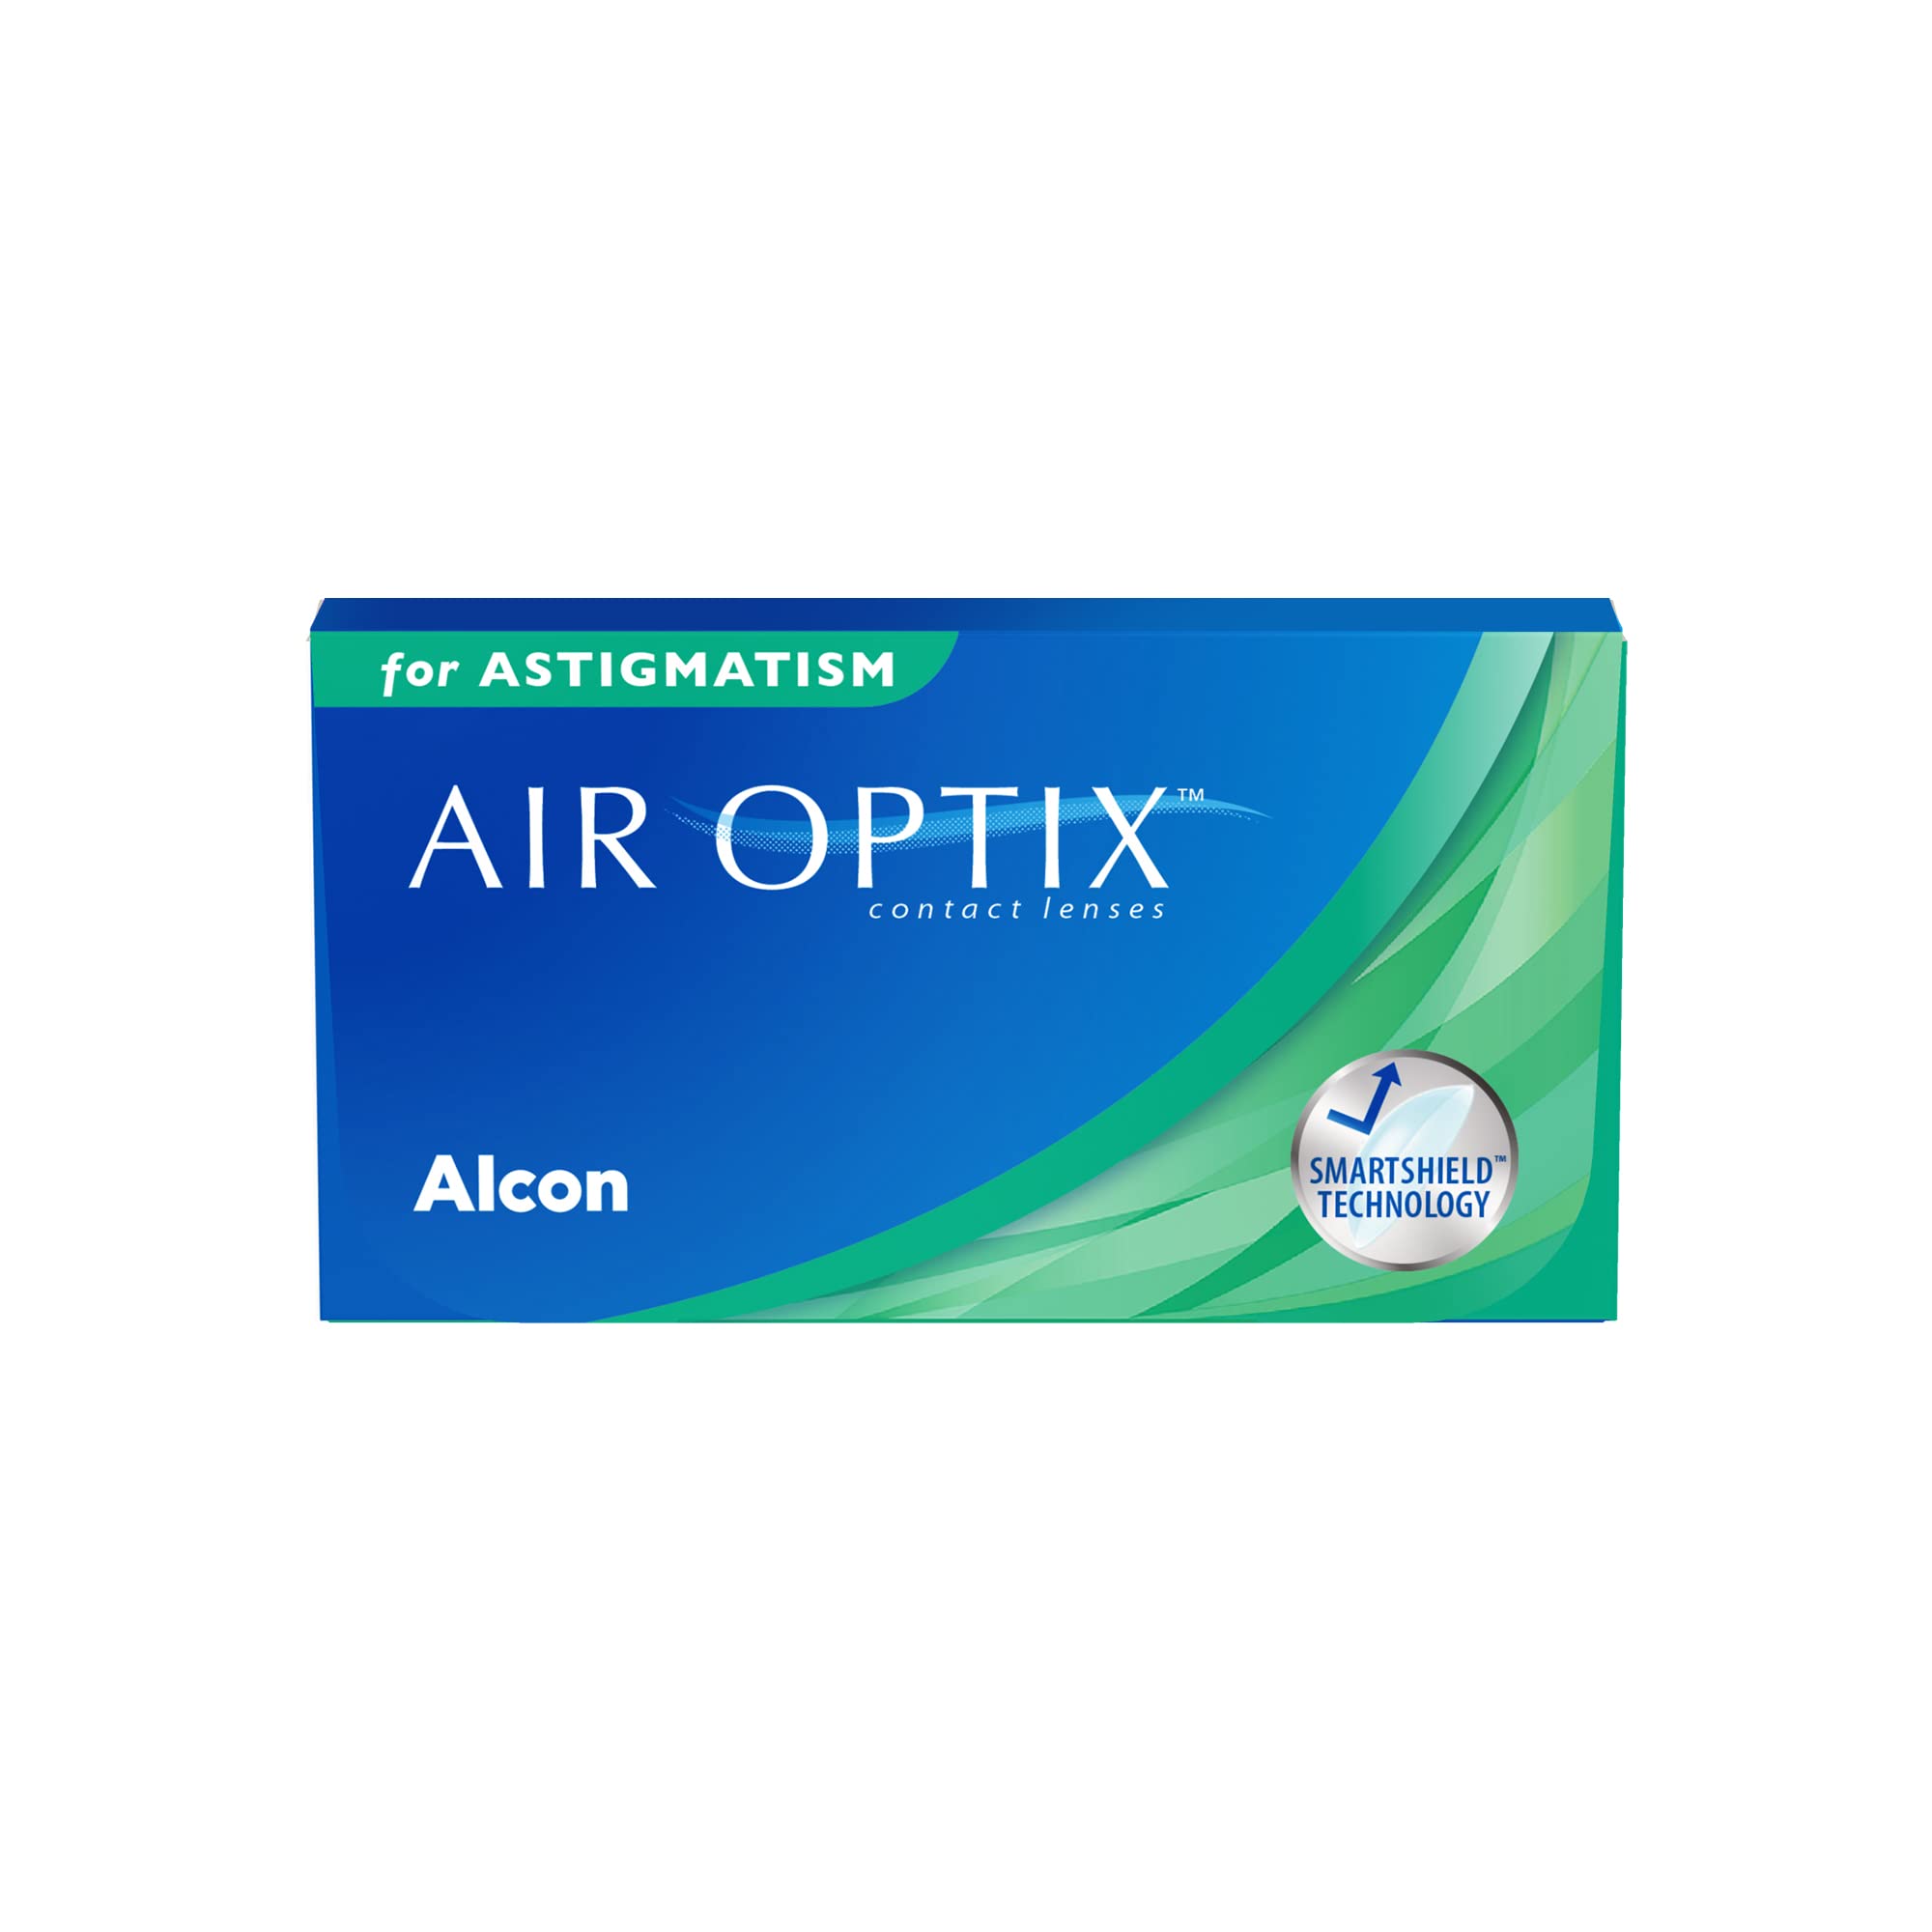 Air Optix for Astigmatism Monatslinsen weich, 6 Stück, BC 8.7 mm, DIA 14.5 mm, CYL -1.25, ACHSE 110, + 1.75 Dioptrien